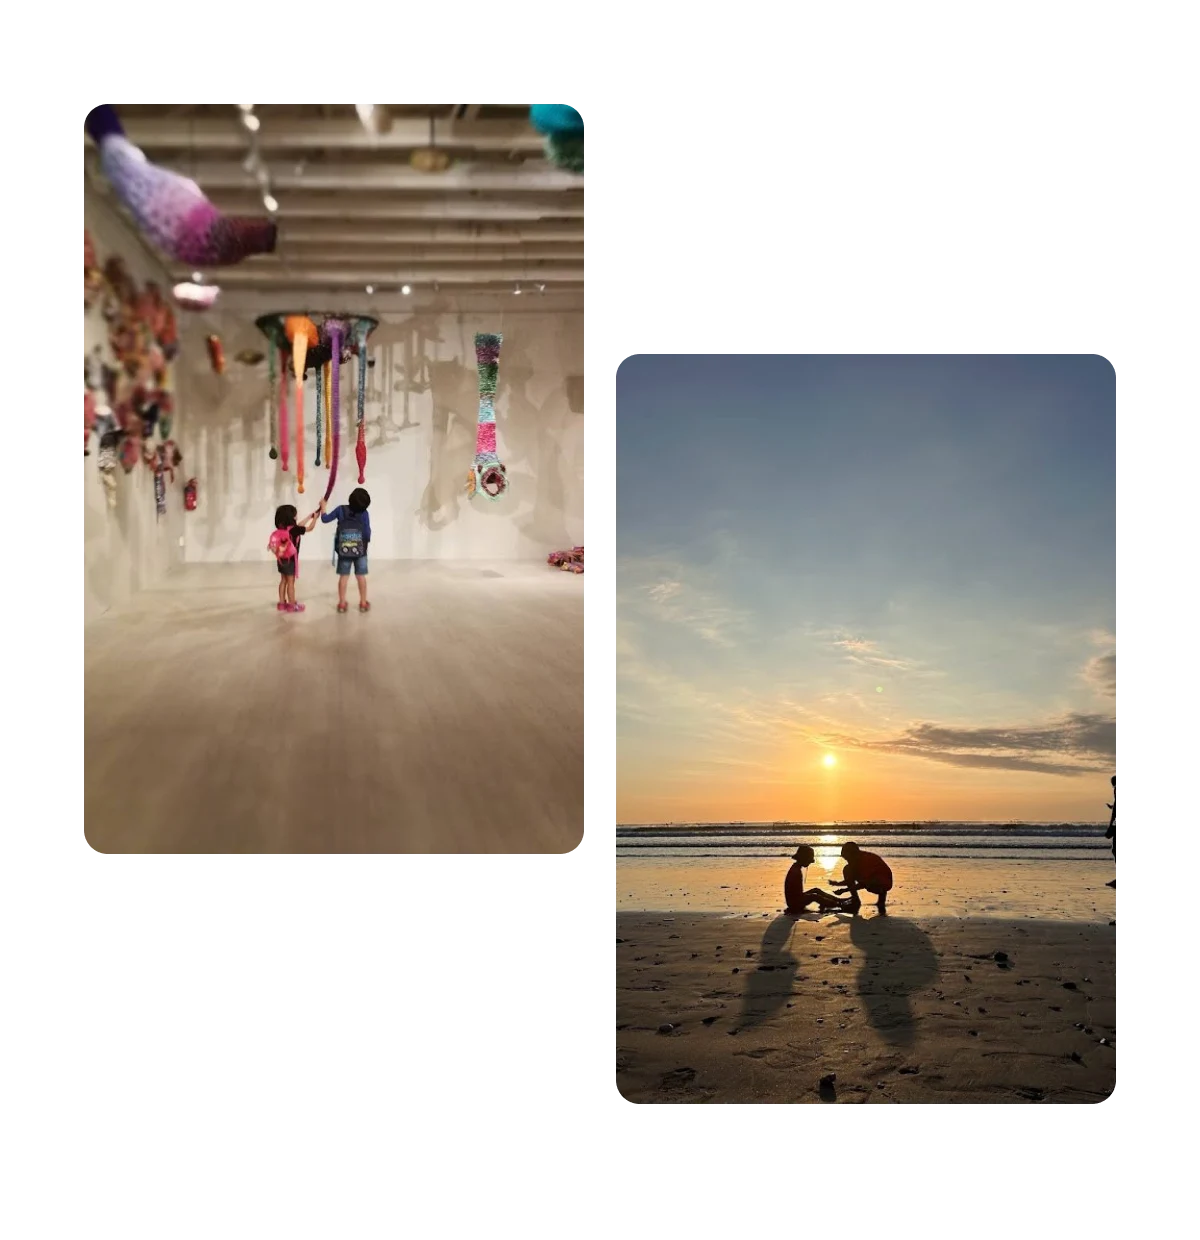 Two pins, children enjoying fun museum exhibit, two people at beach at sunset